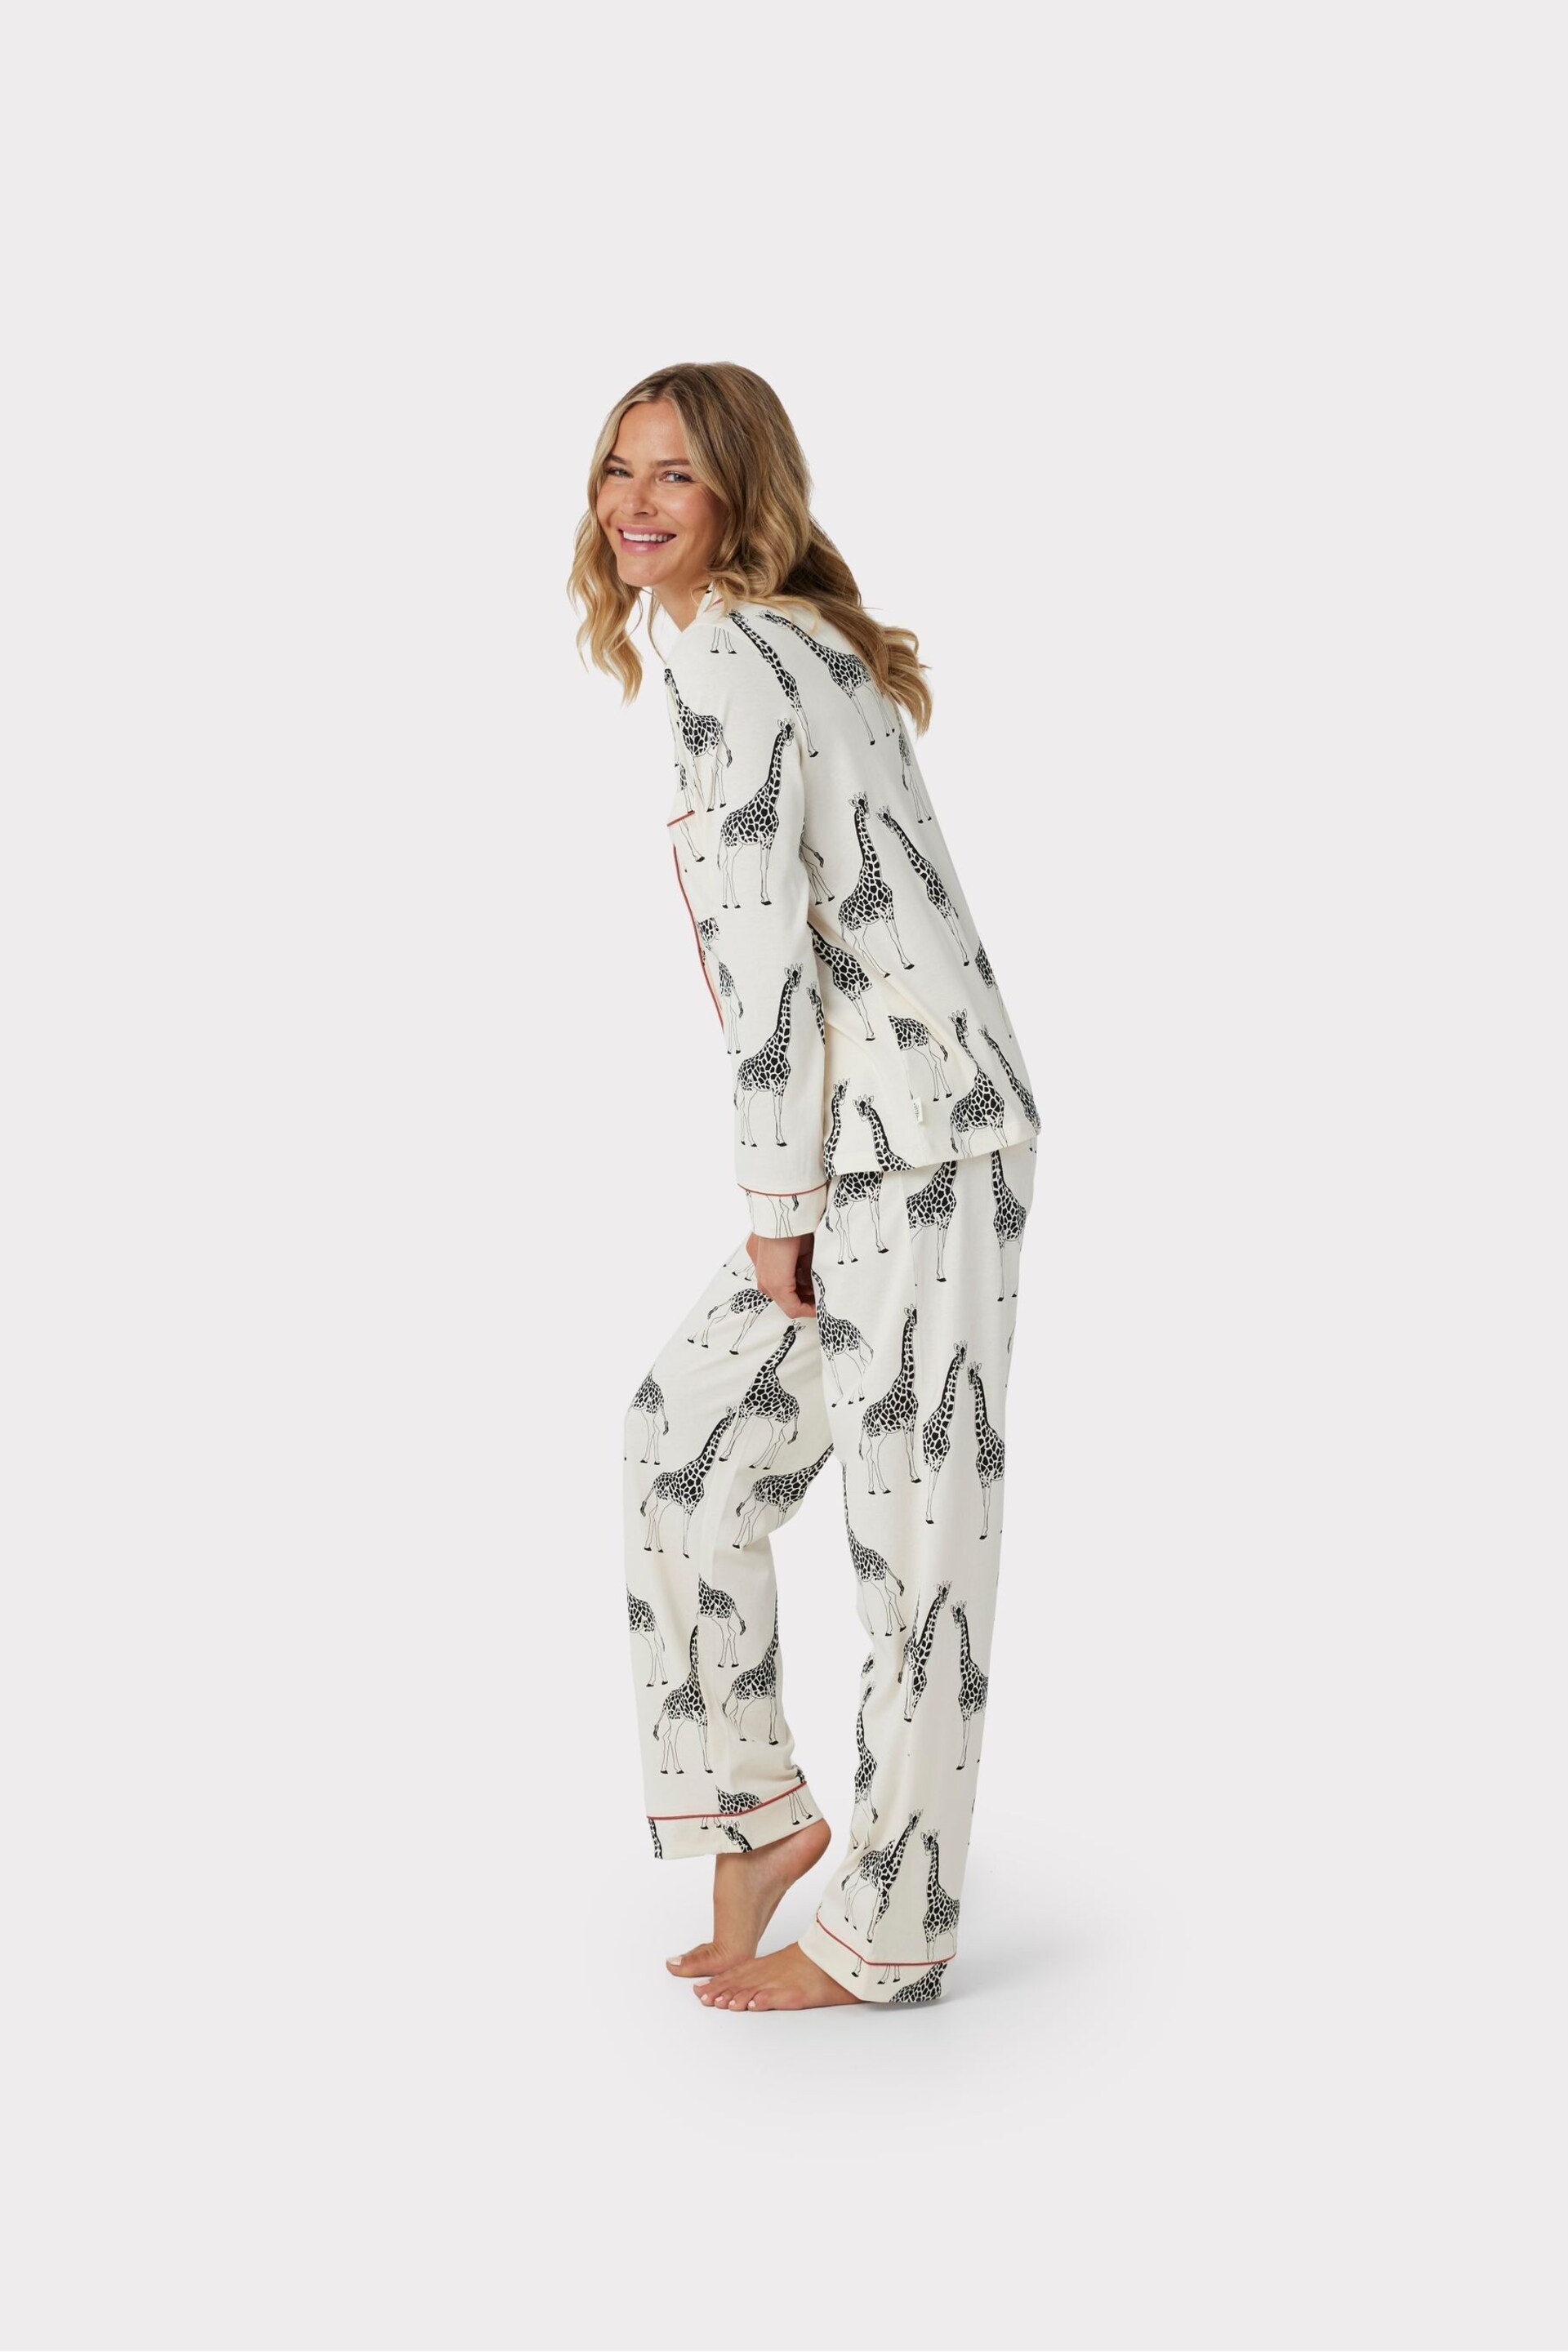 Chelsea Peers Cream Giraffe Button Up Long Pyjama Set - Image 4 of 9